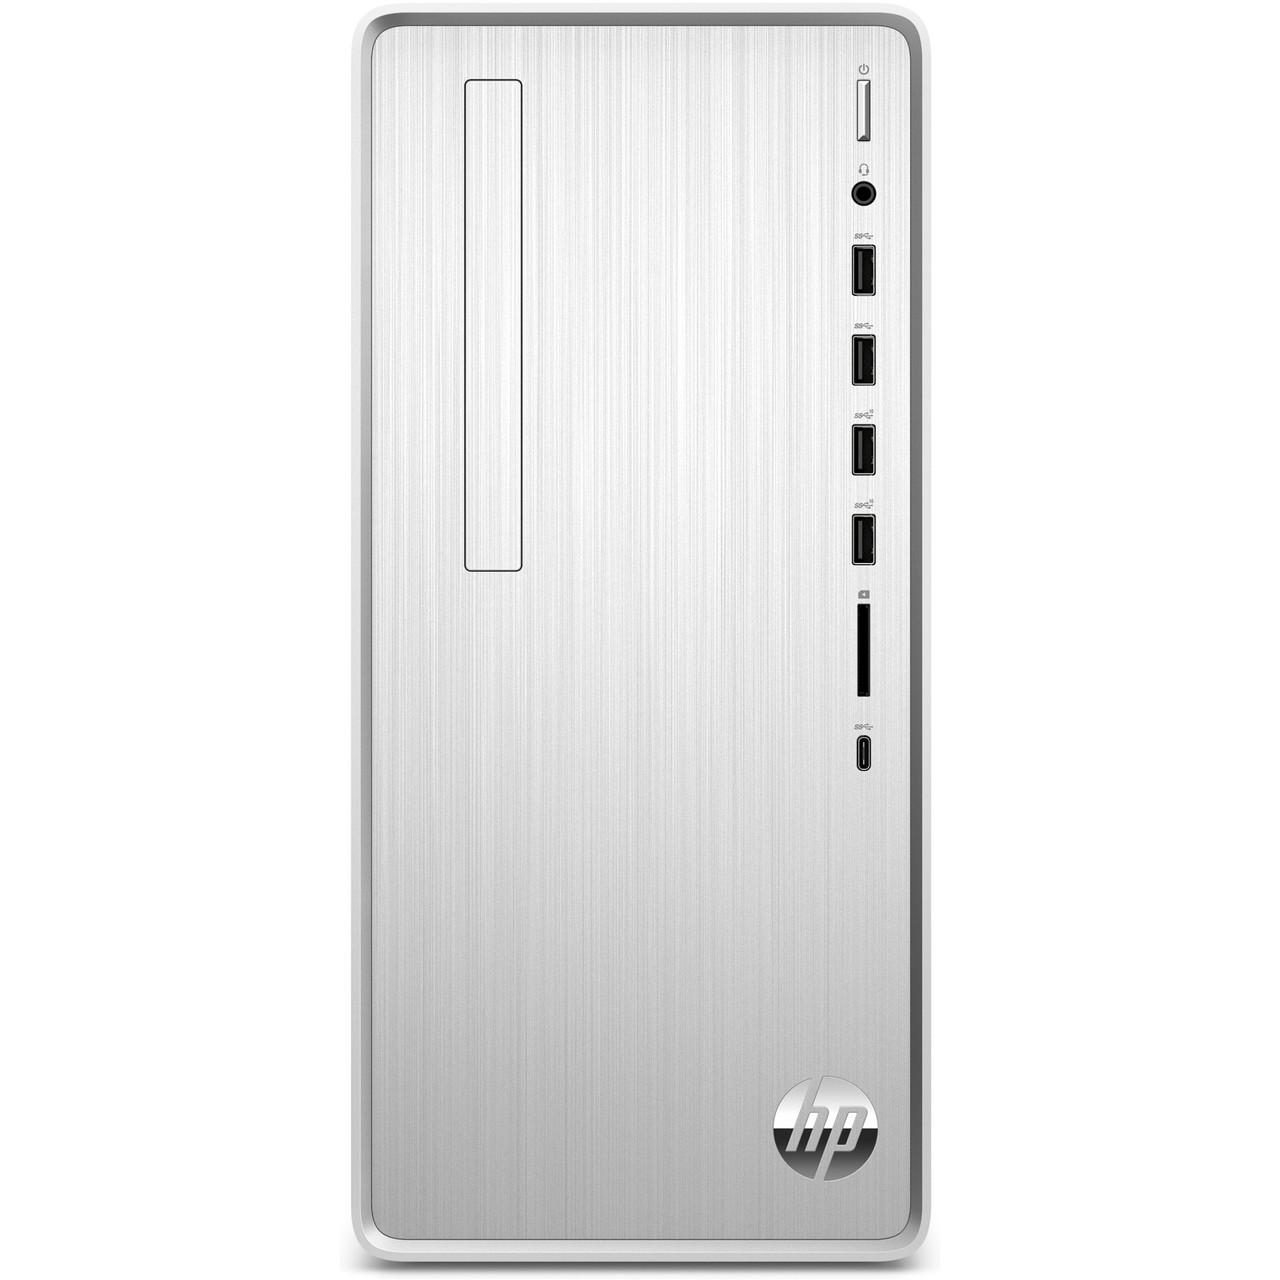 HP Pavilion TP01-2040 Desktop Computer - AMD Ryzen 5